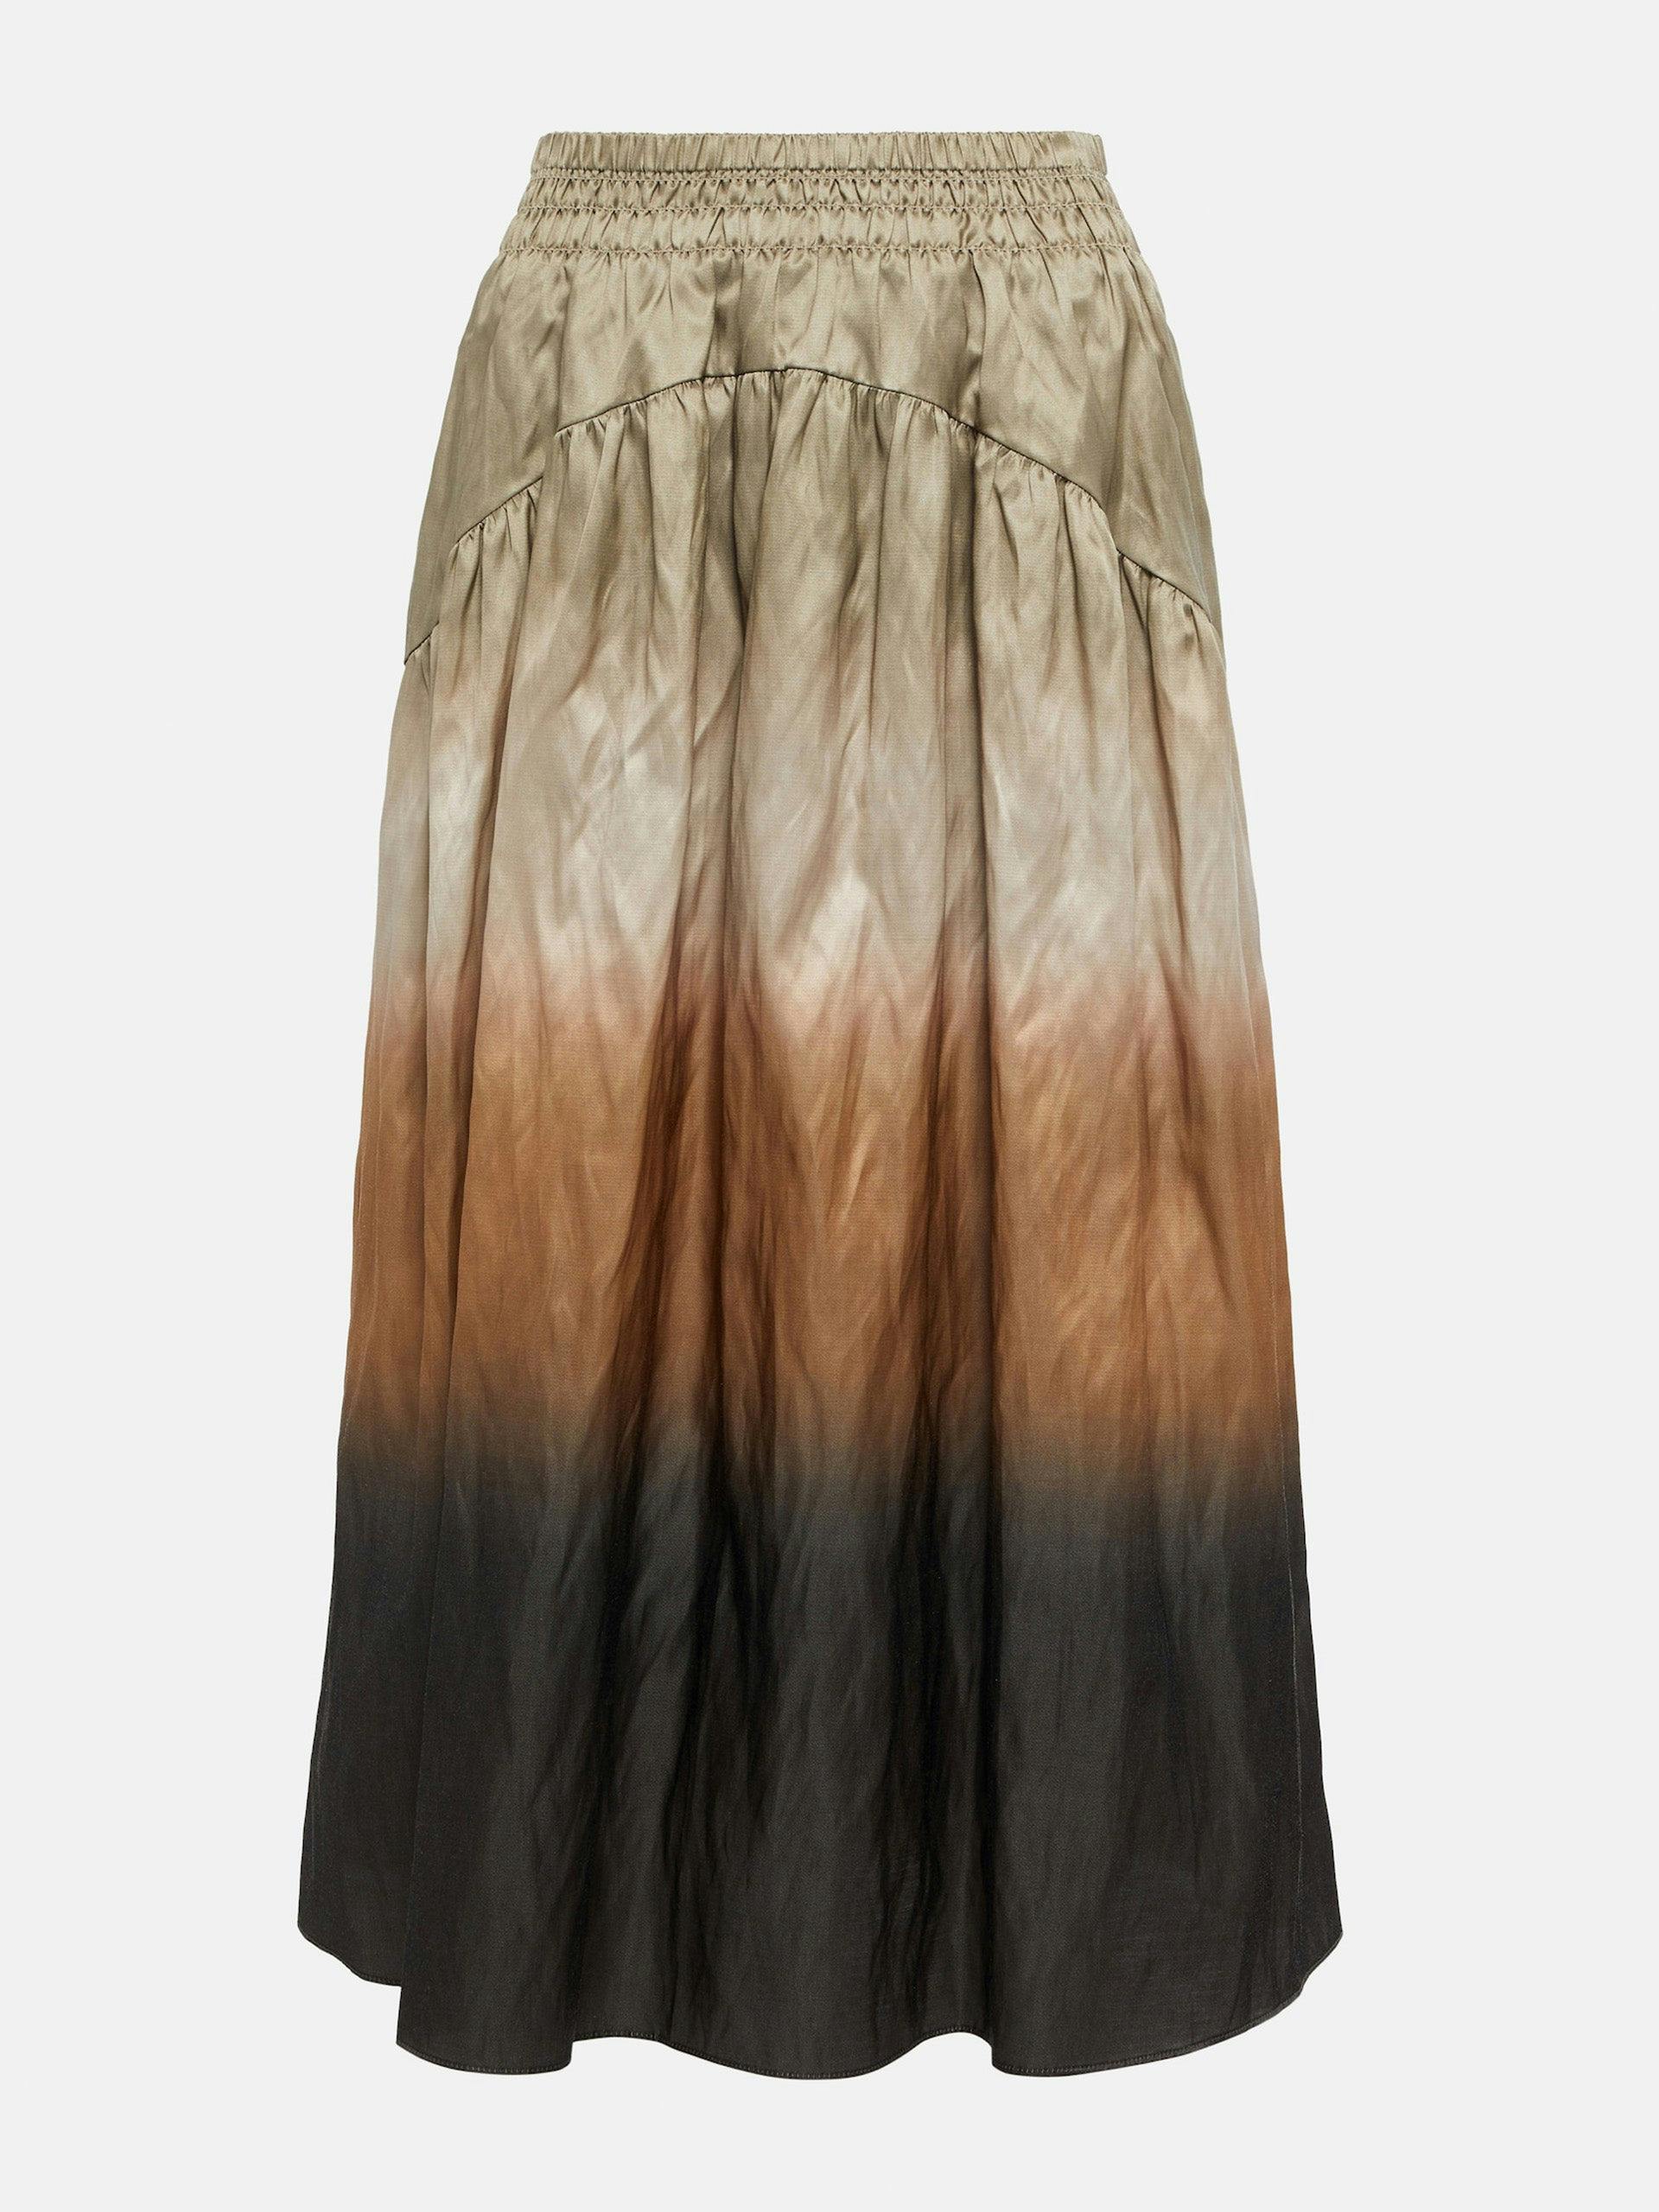 Brown gradient midi skirt